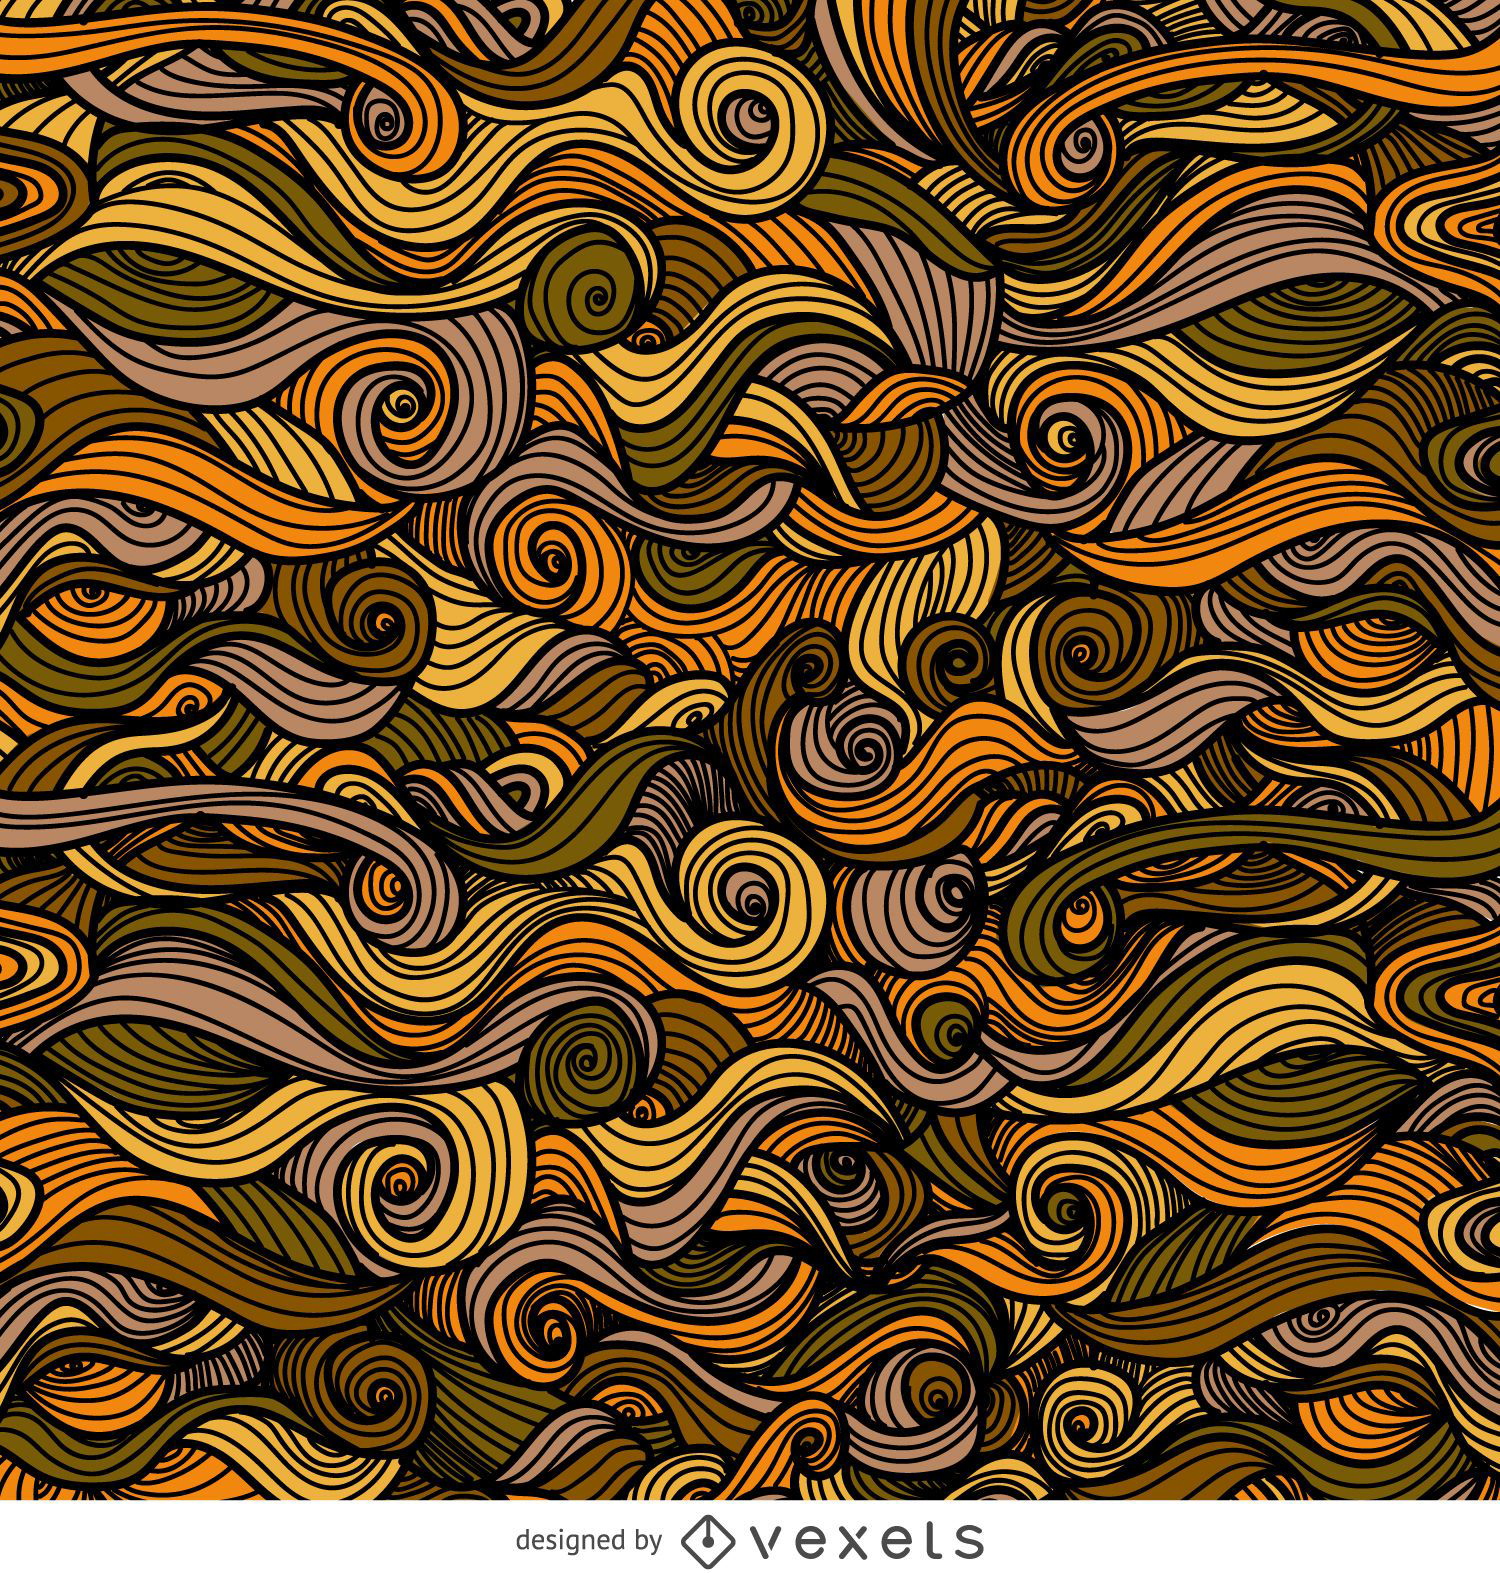 Autumn ornamental curly swirls background